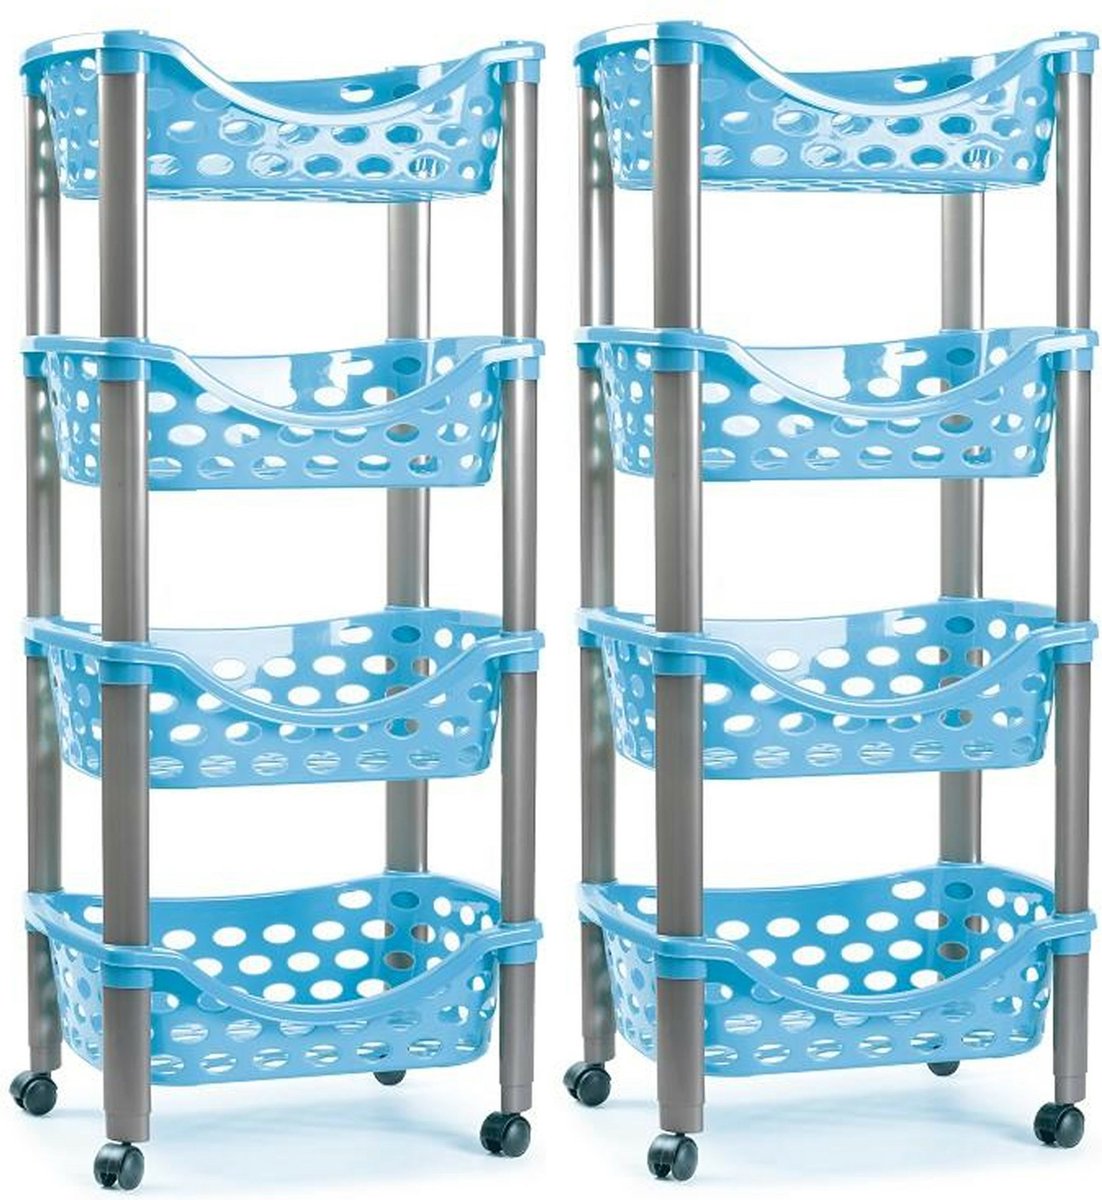 PlasticForte - keukentrolley - 2x - kunststof - blauw - 40 x 88 cm